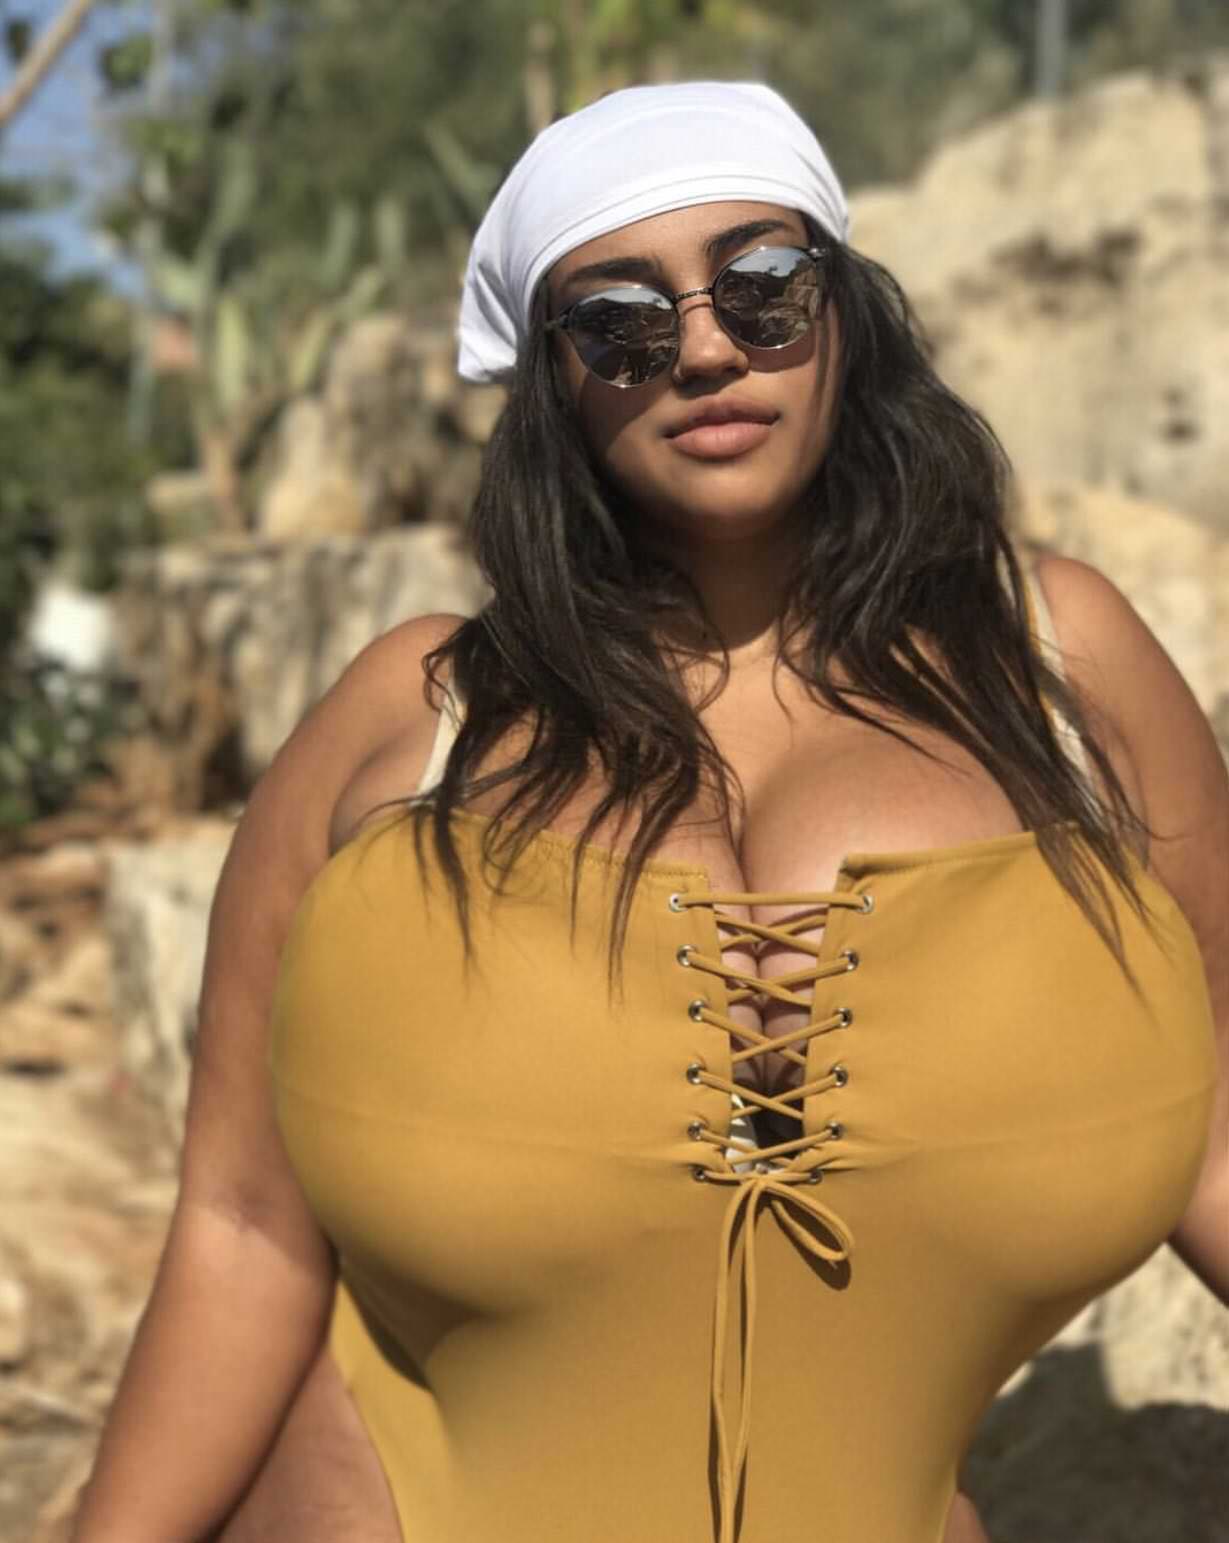 Big heavy tits